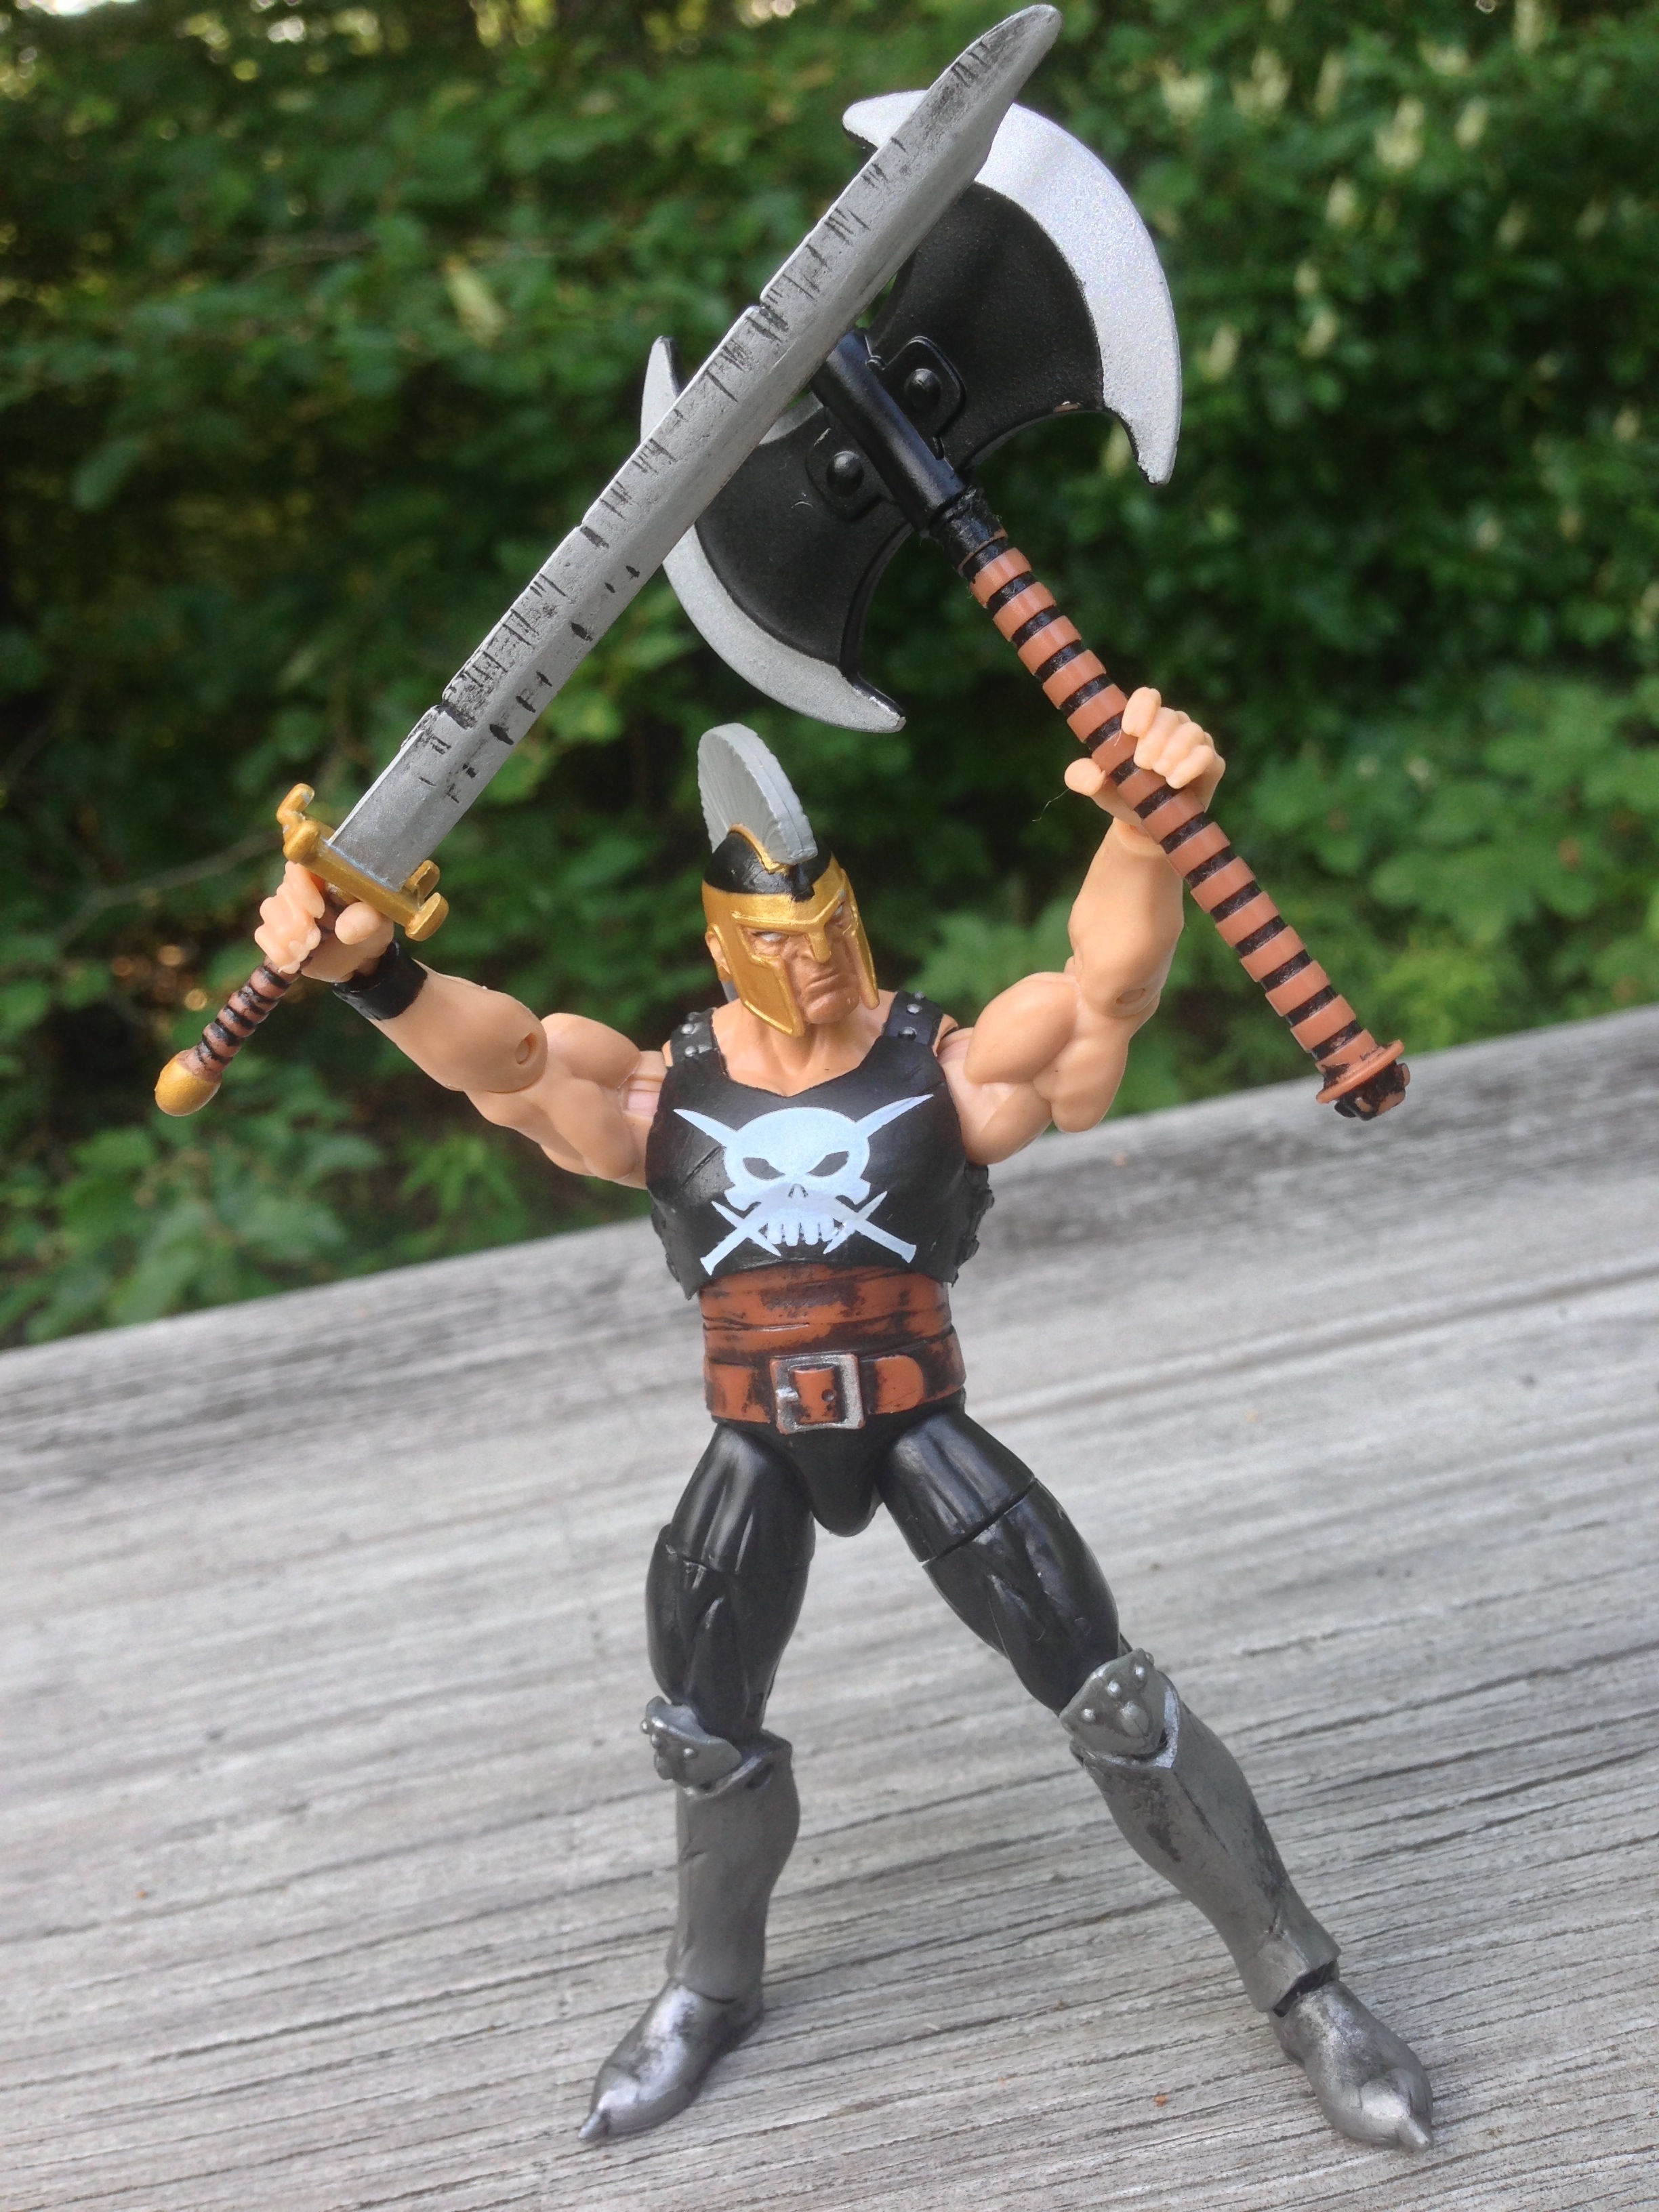 infinity blade sword toy